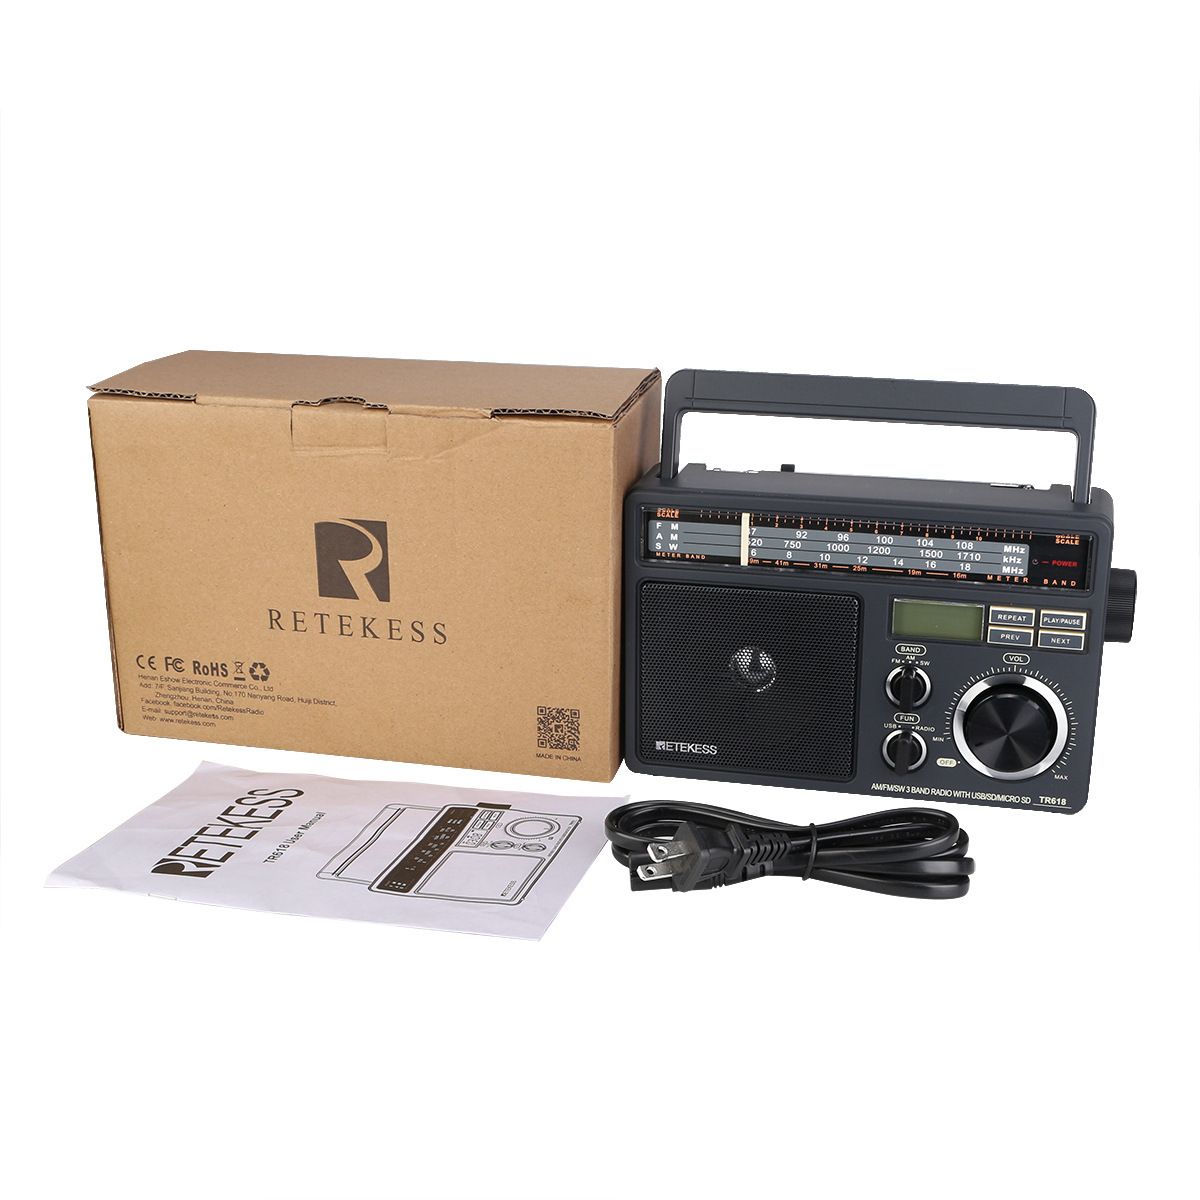 Retekess-TR618-FM-AM-SW-3-Band-Radio-USB-TF-Card-Speaker-MP3-Player-1646356